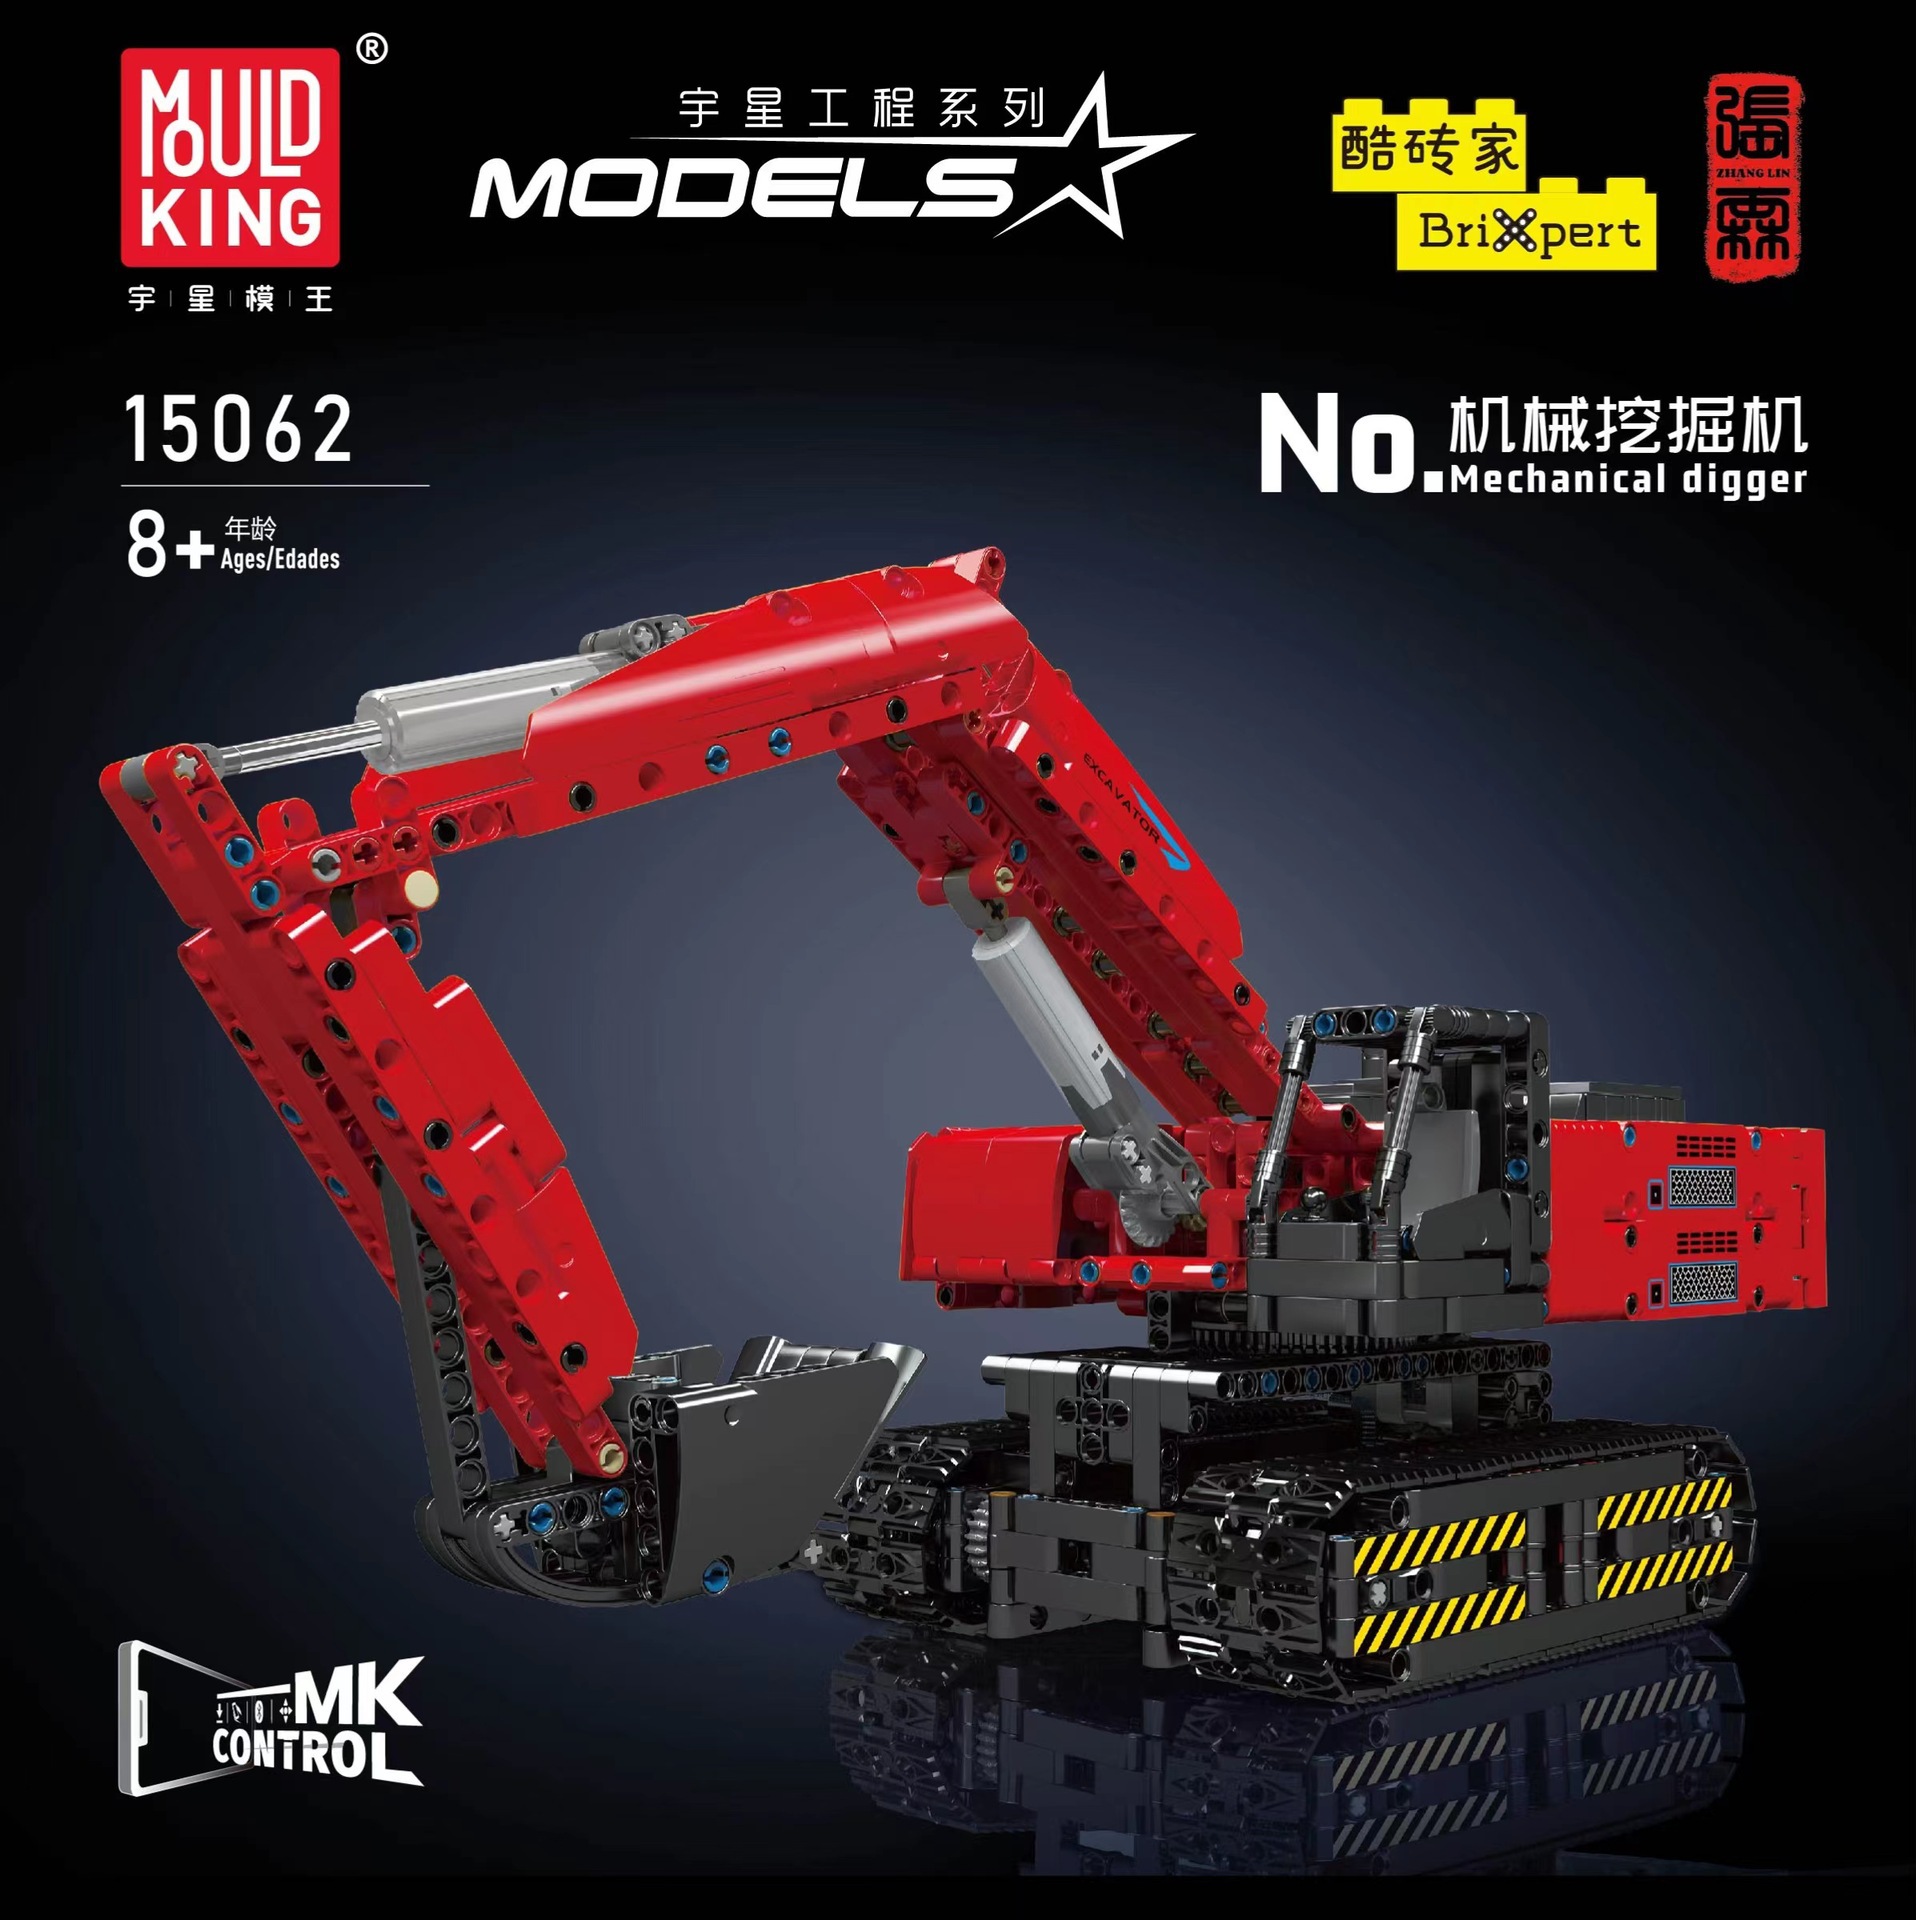 Mould King 15061 Mechanical excavator